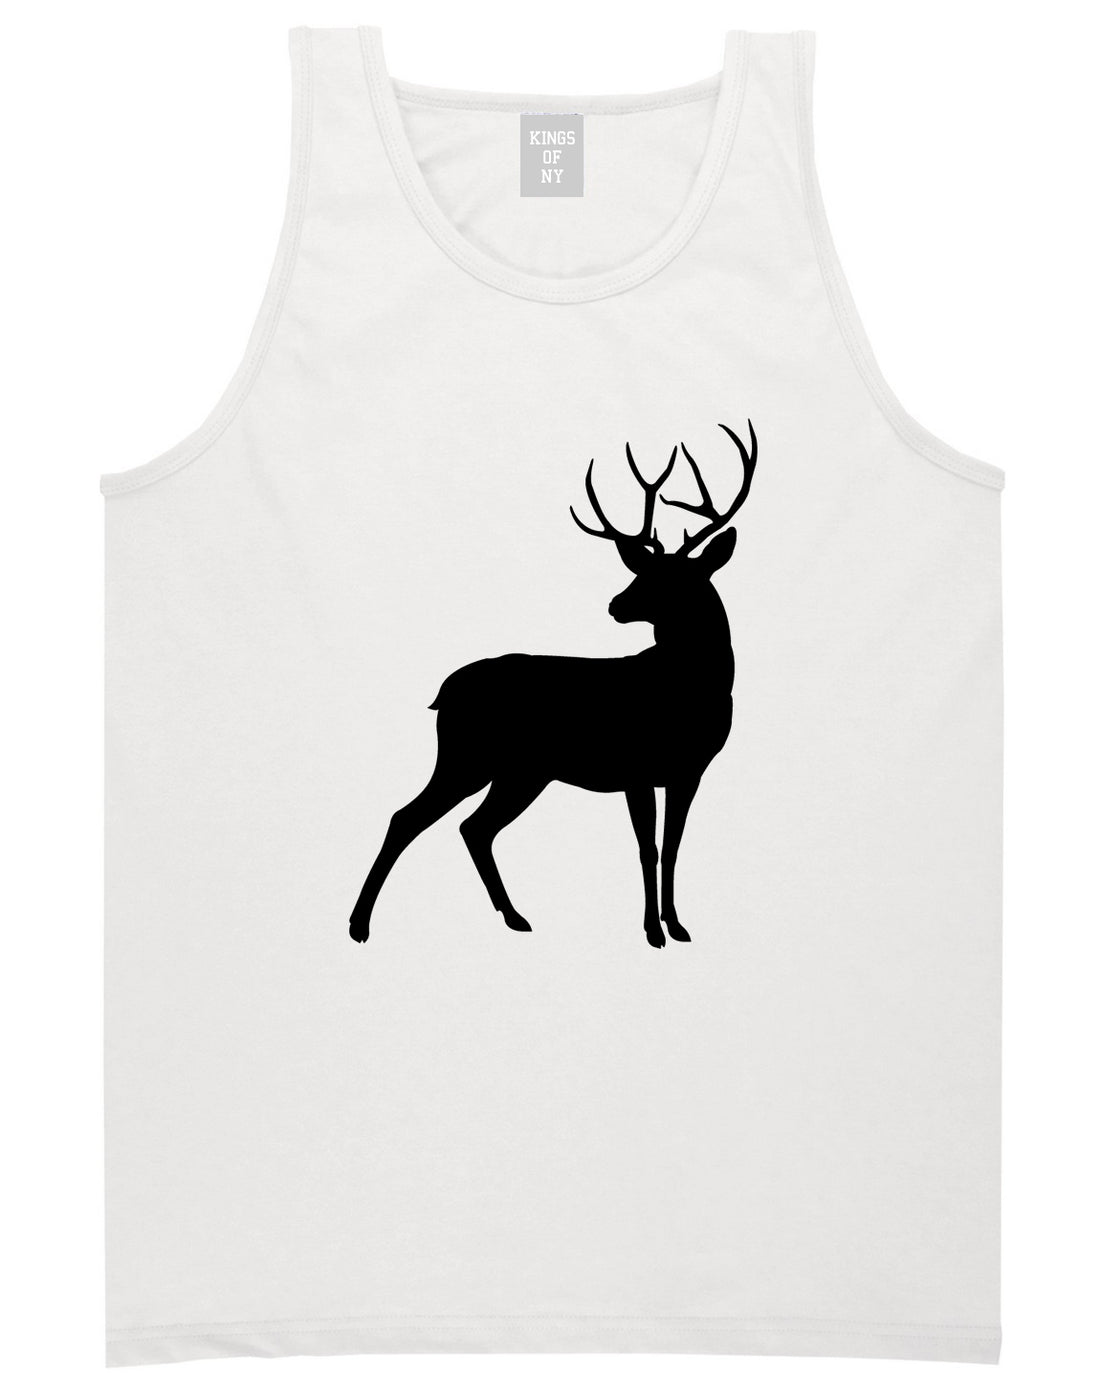 Deer_Hunting_Hunter Mens White Tank Top Shirt by Kings Of NY